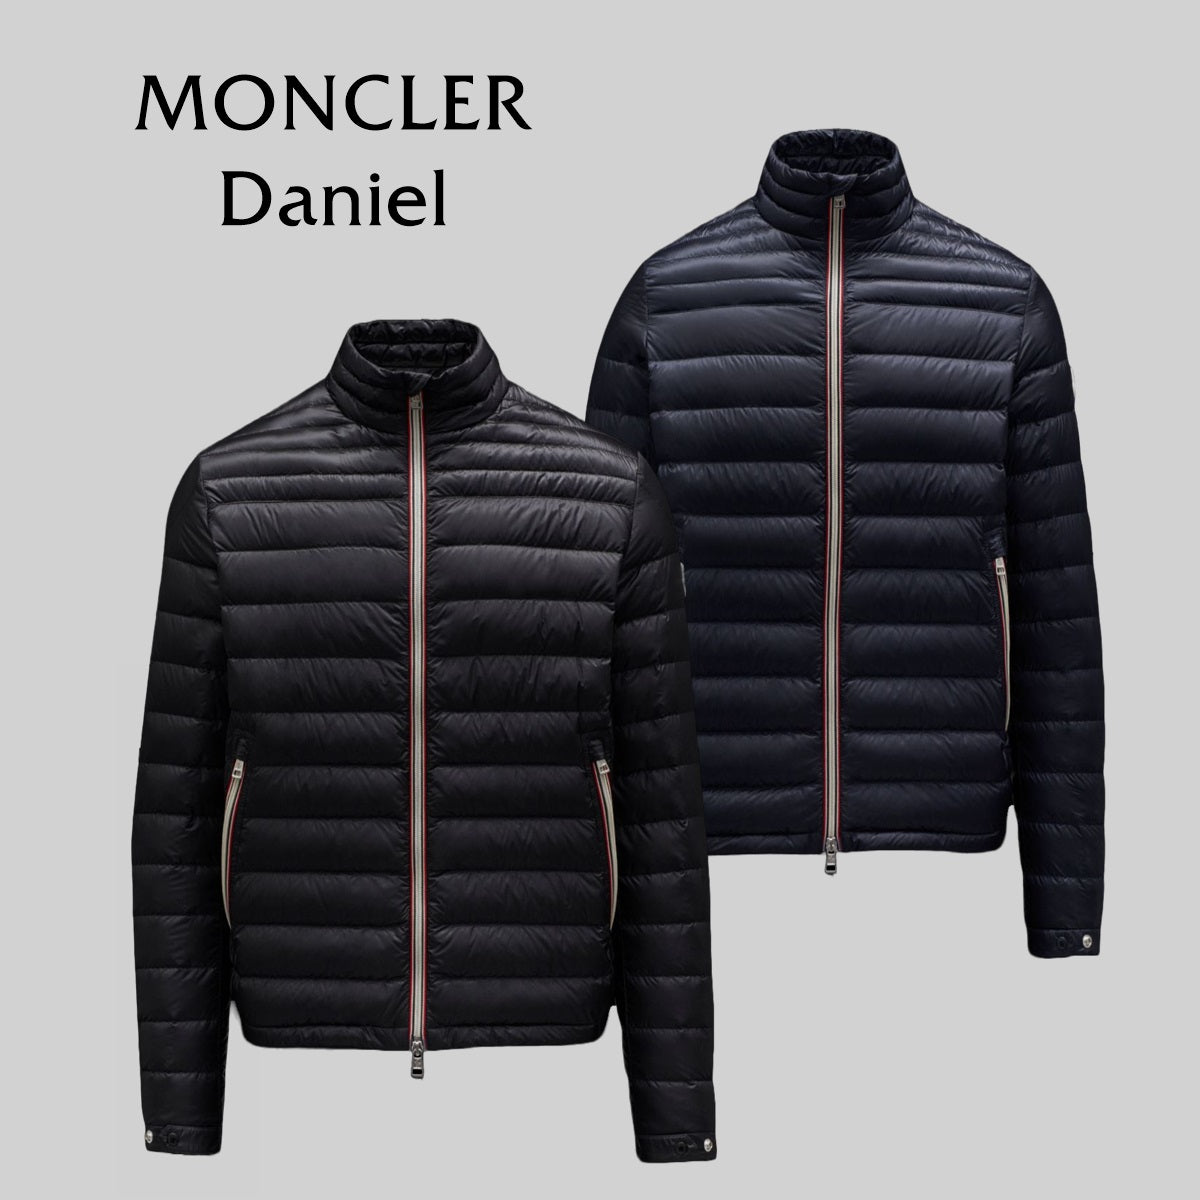 Moncler DANIEL short down jacket